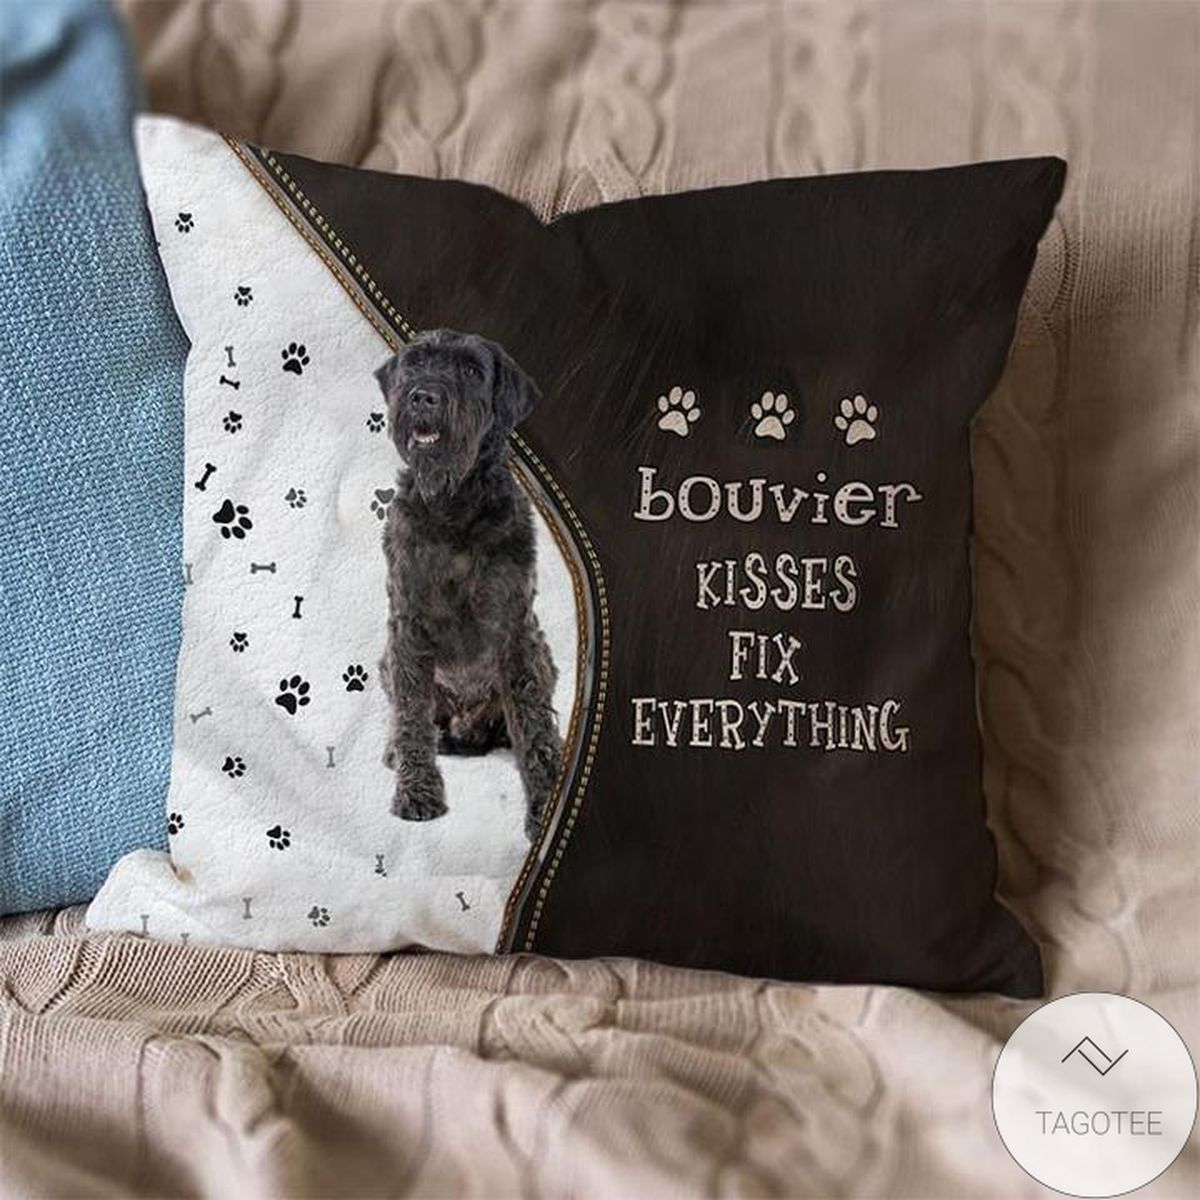 Bouvier Kisses Fix Everything Pillowcase